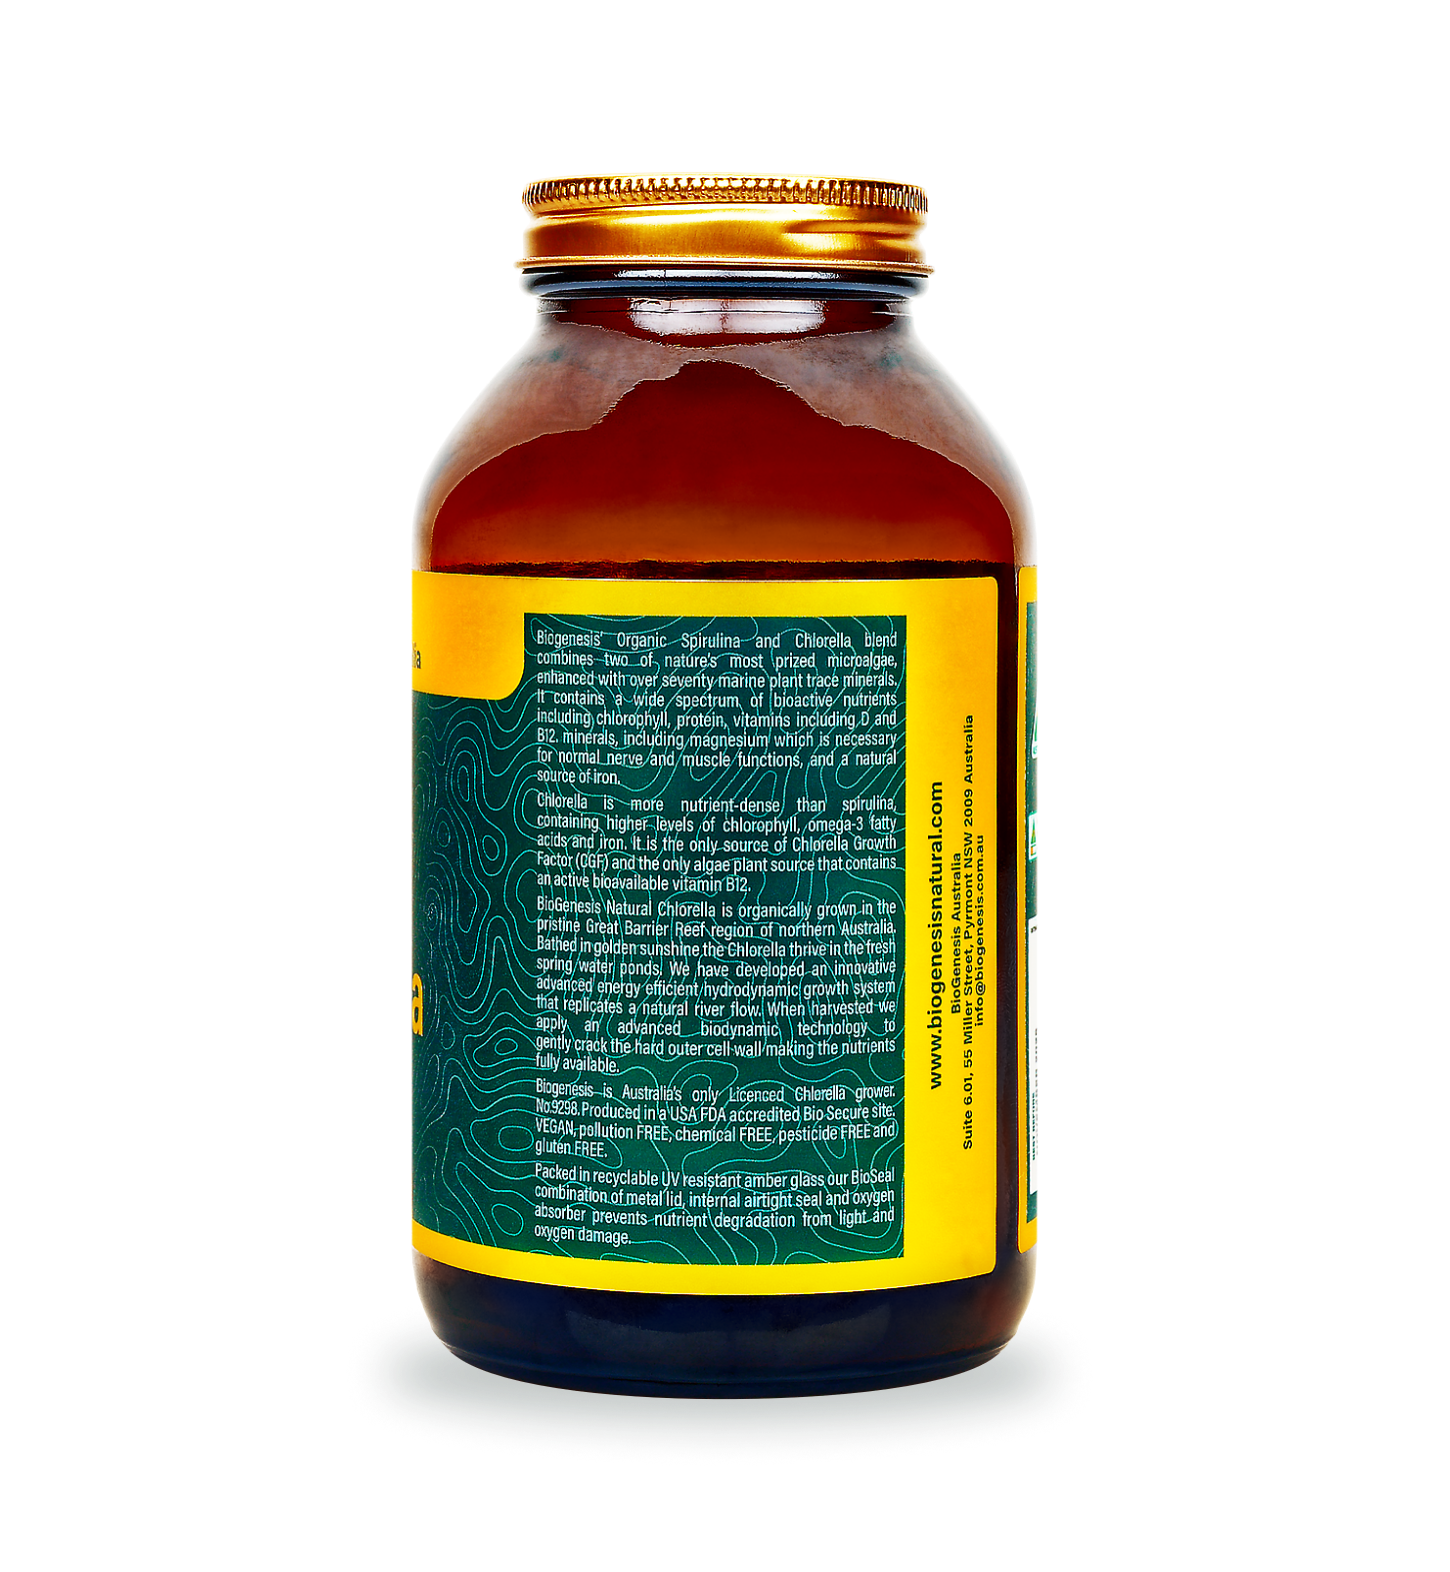 Organic Spirulina & Chlorella Powder, 200g